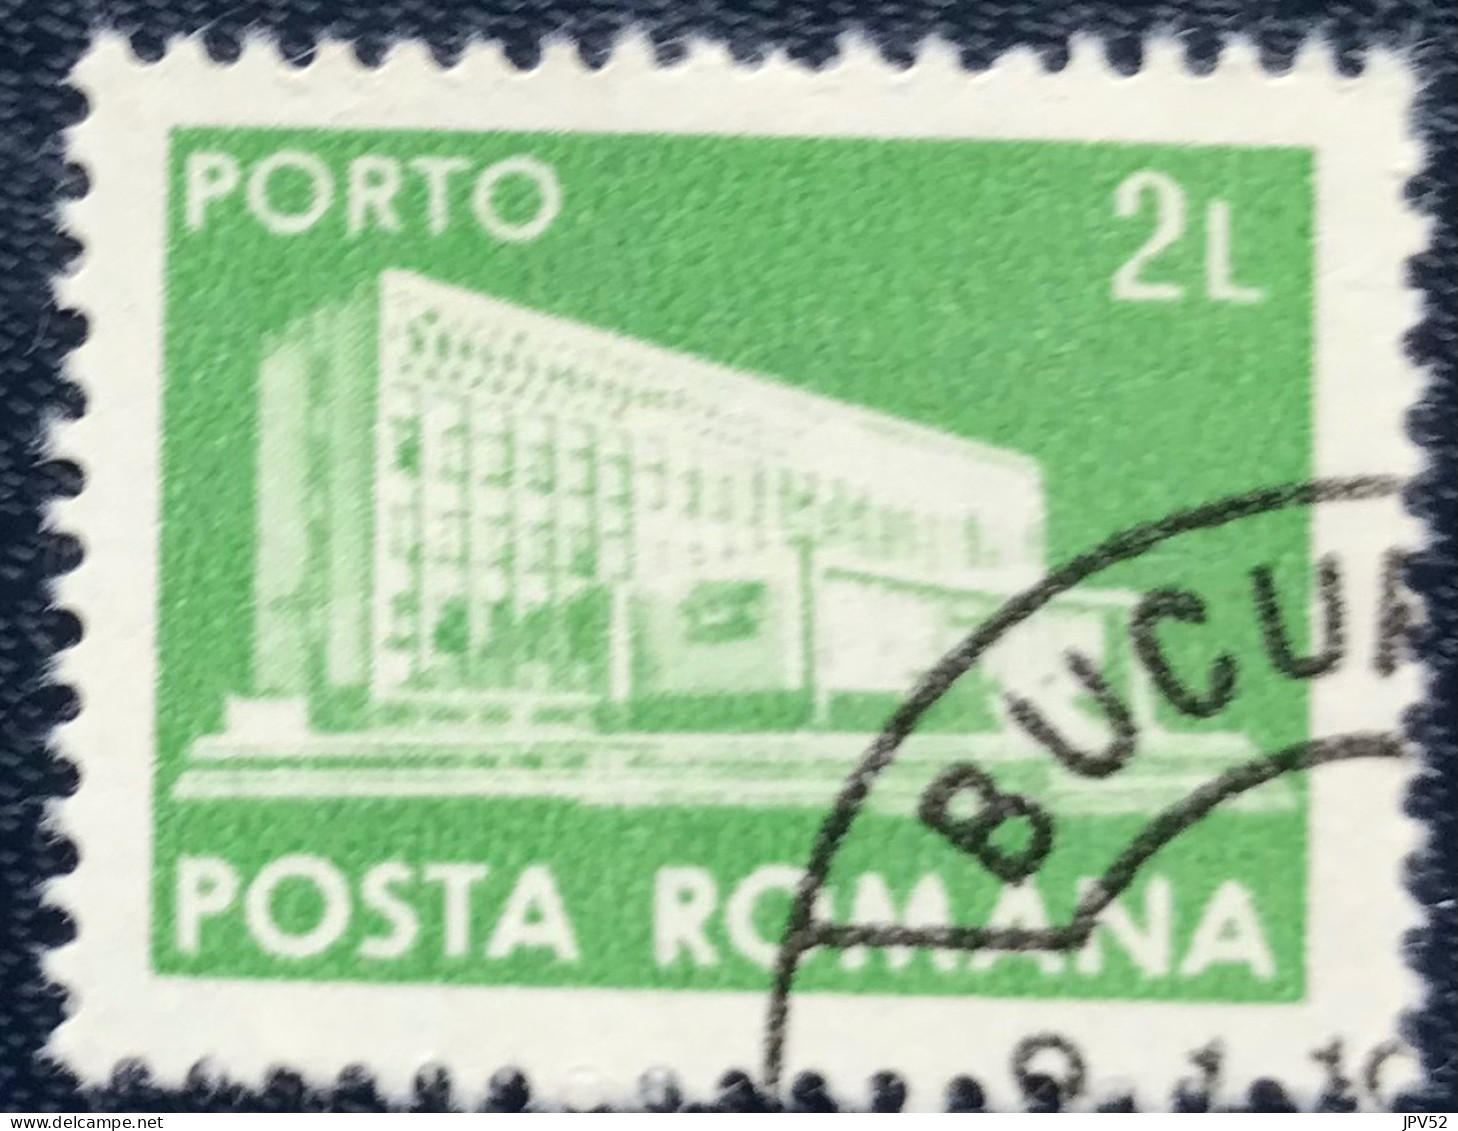 Romana - Roemenië - C14/53 - 1982 - (°)used - Michel 128 - Postkantoor - Strafport